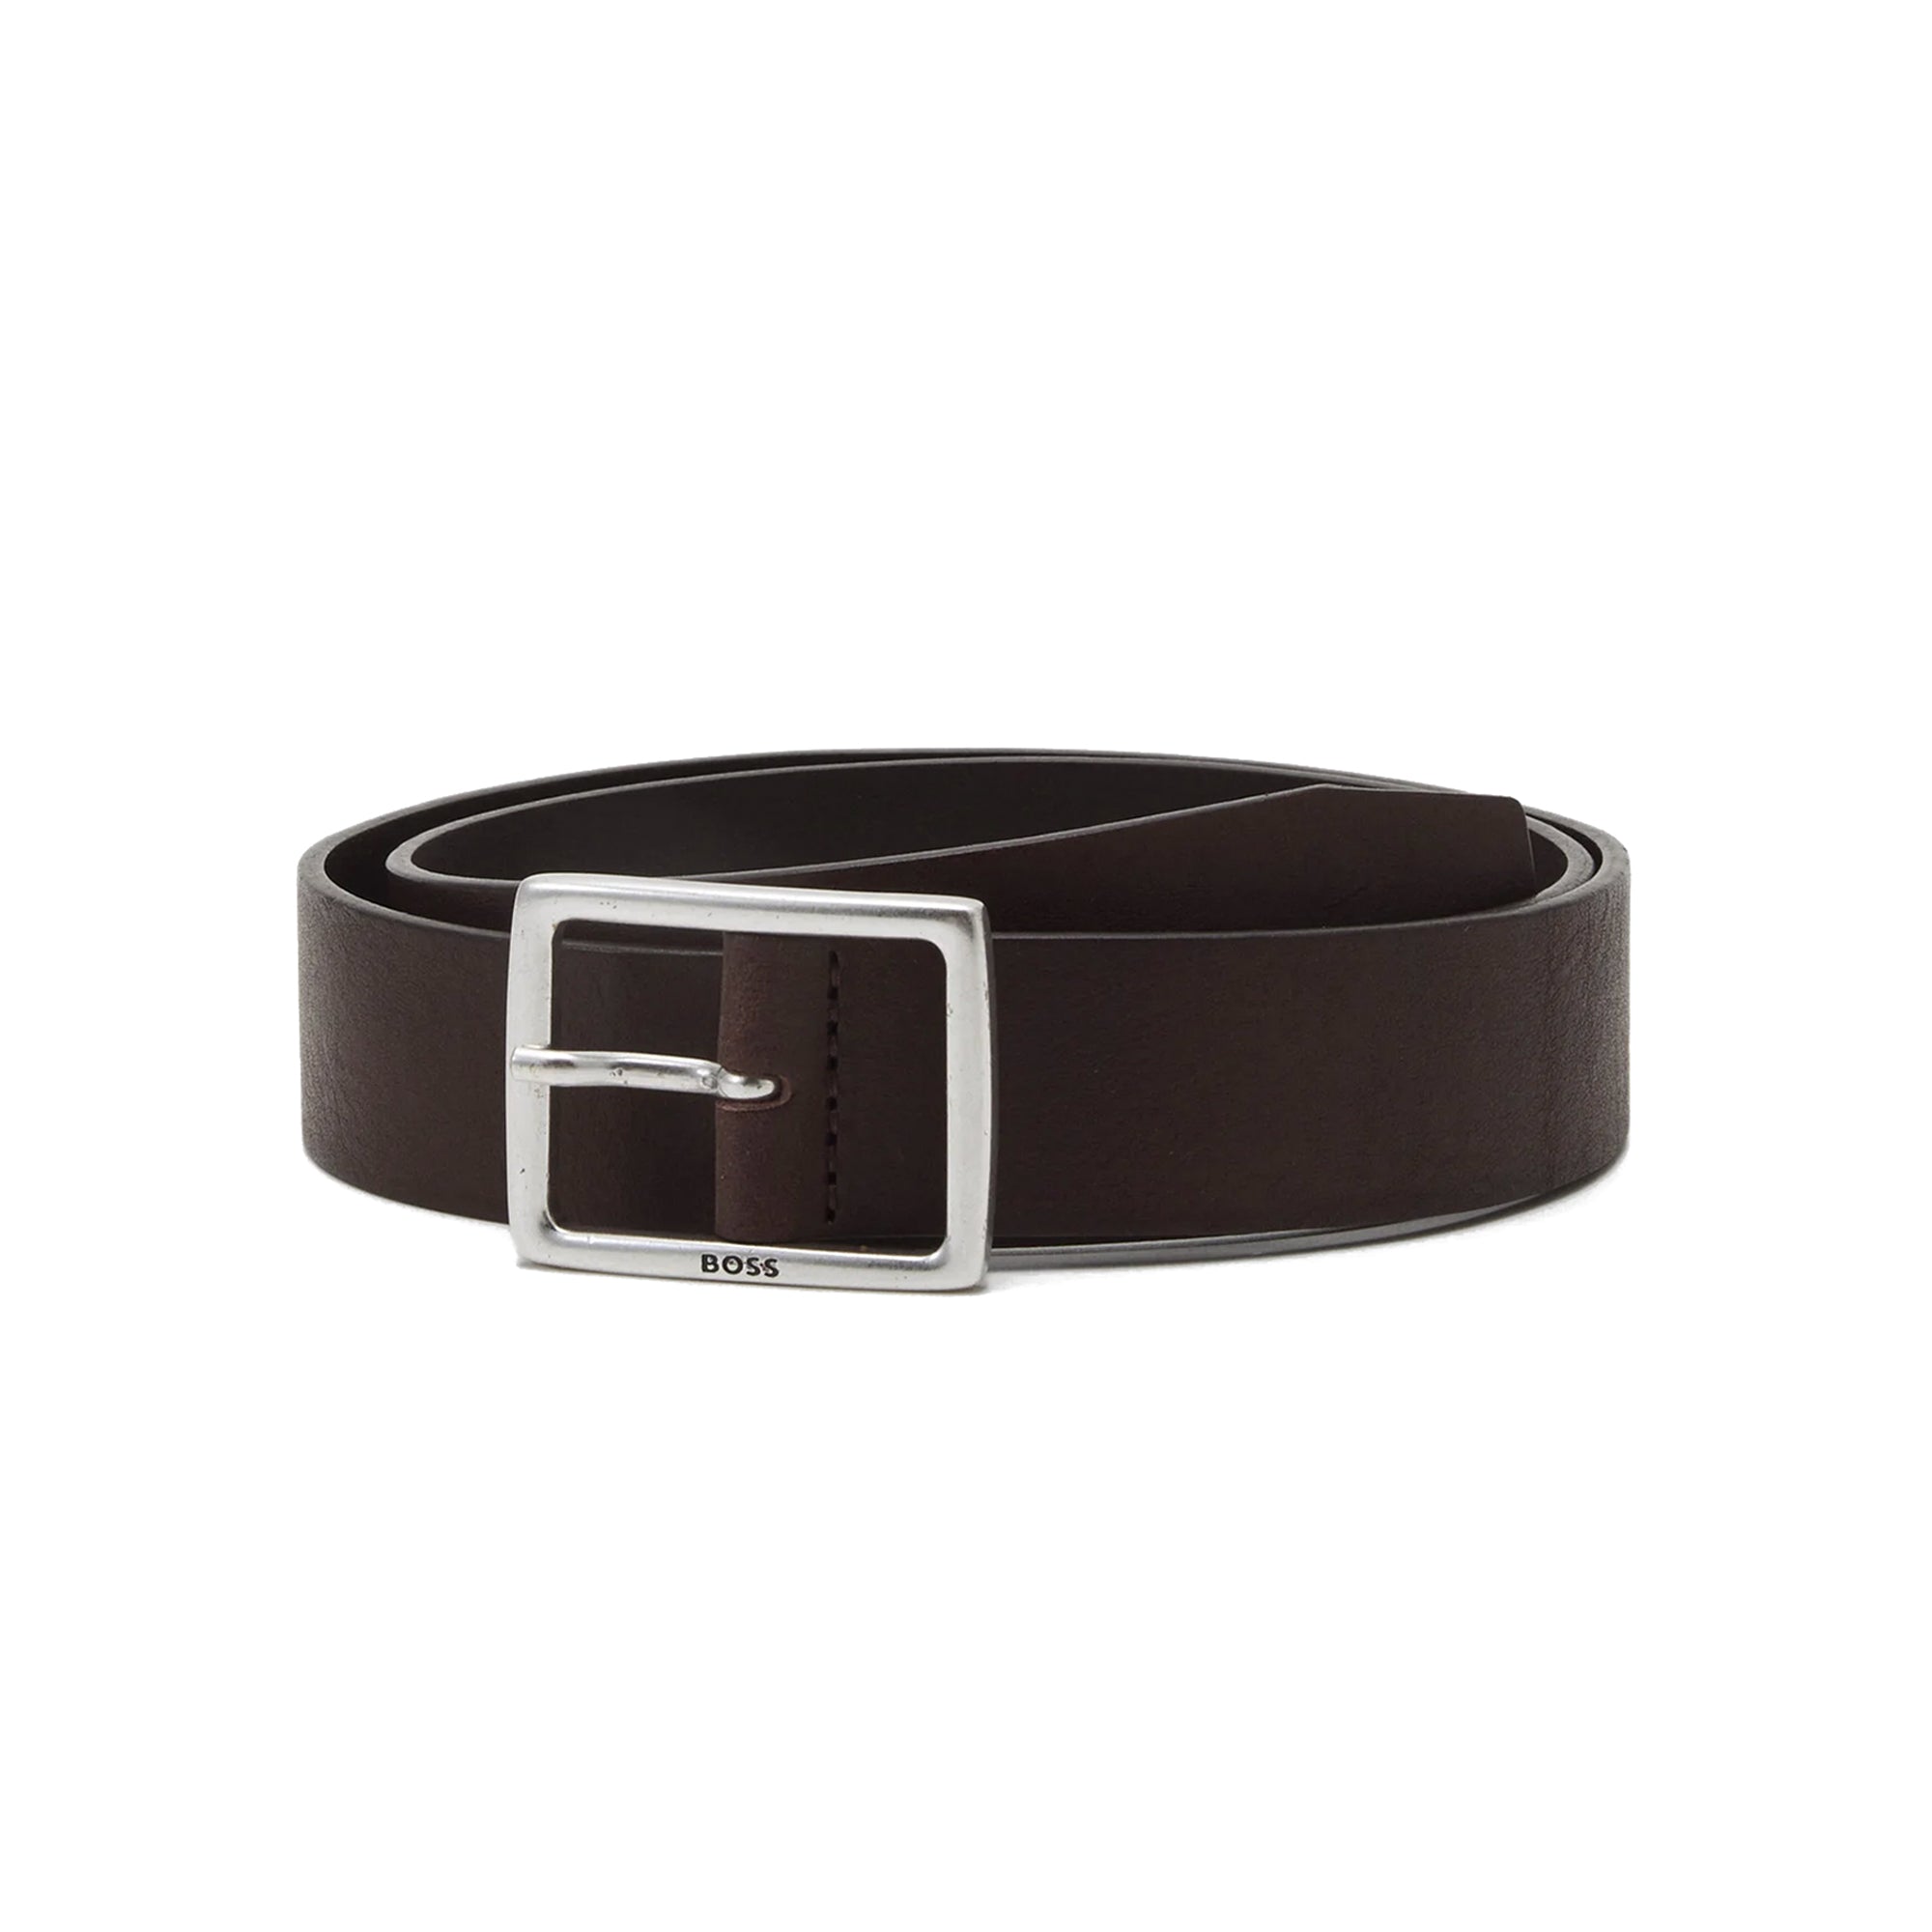 Boss Rudolf Cvb Leather Belt - Dark Brown